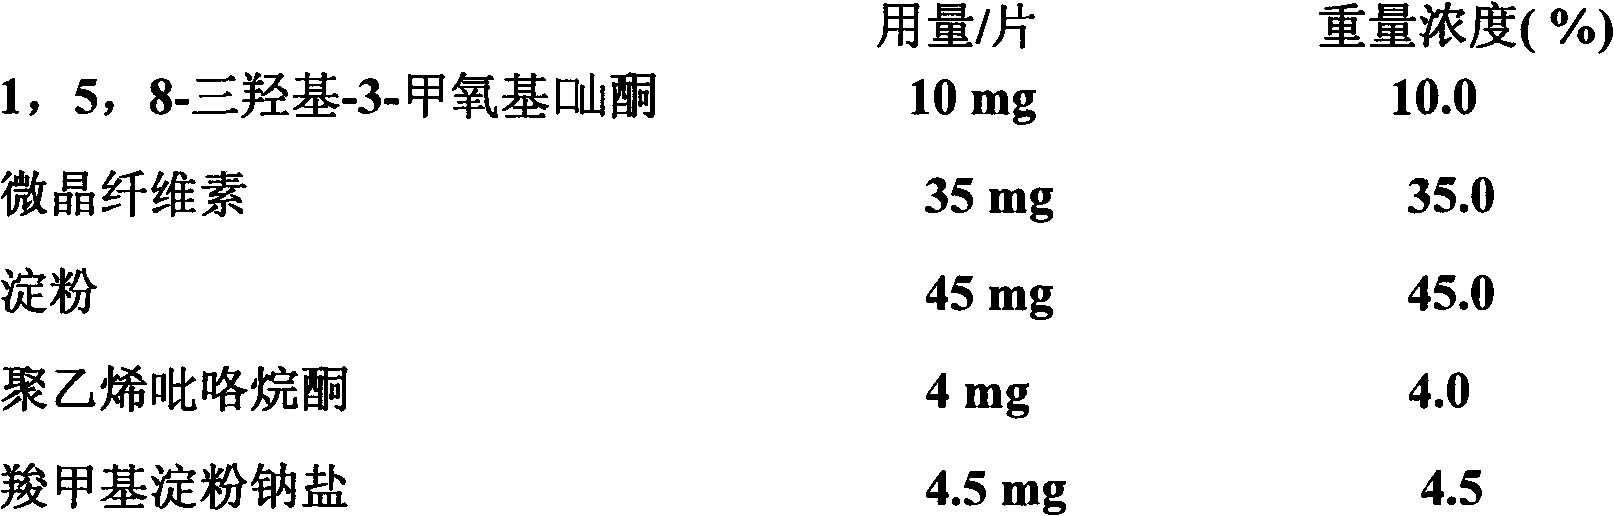 Preparation method of 1,5,8-Trihydroxy-3-methoxy?ketone